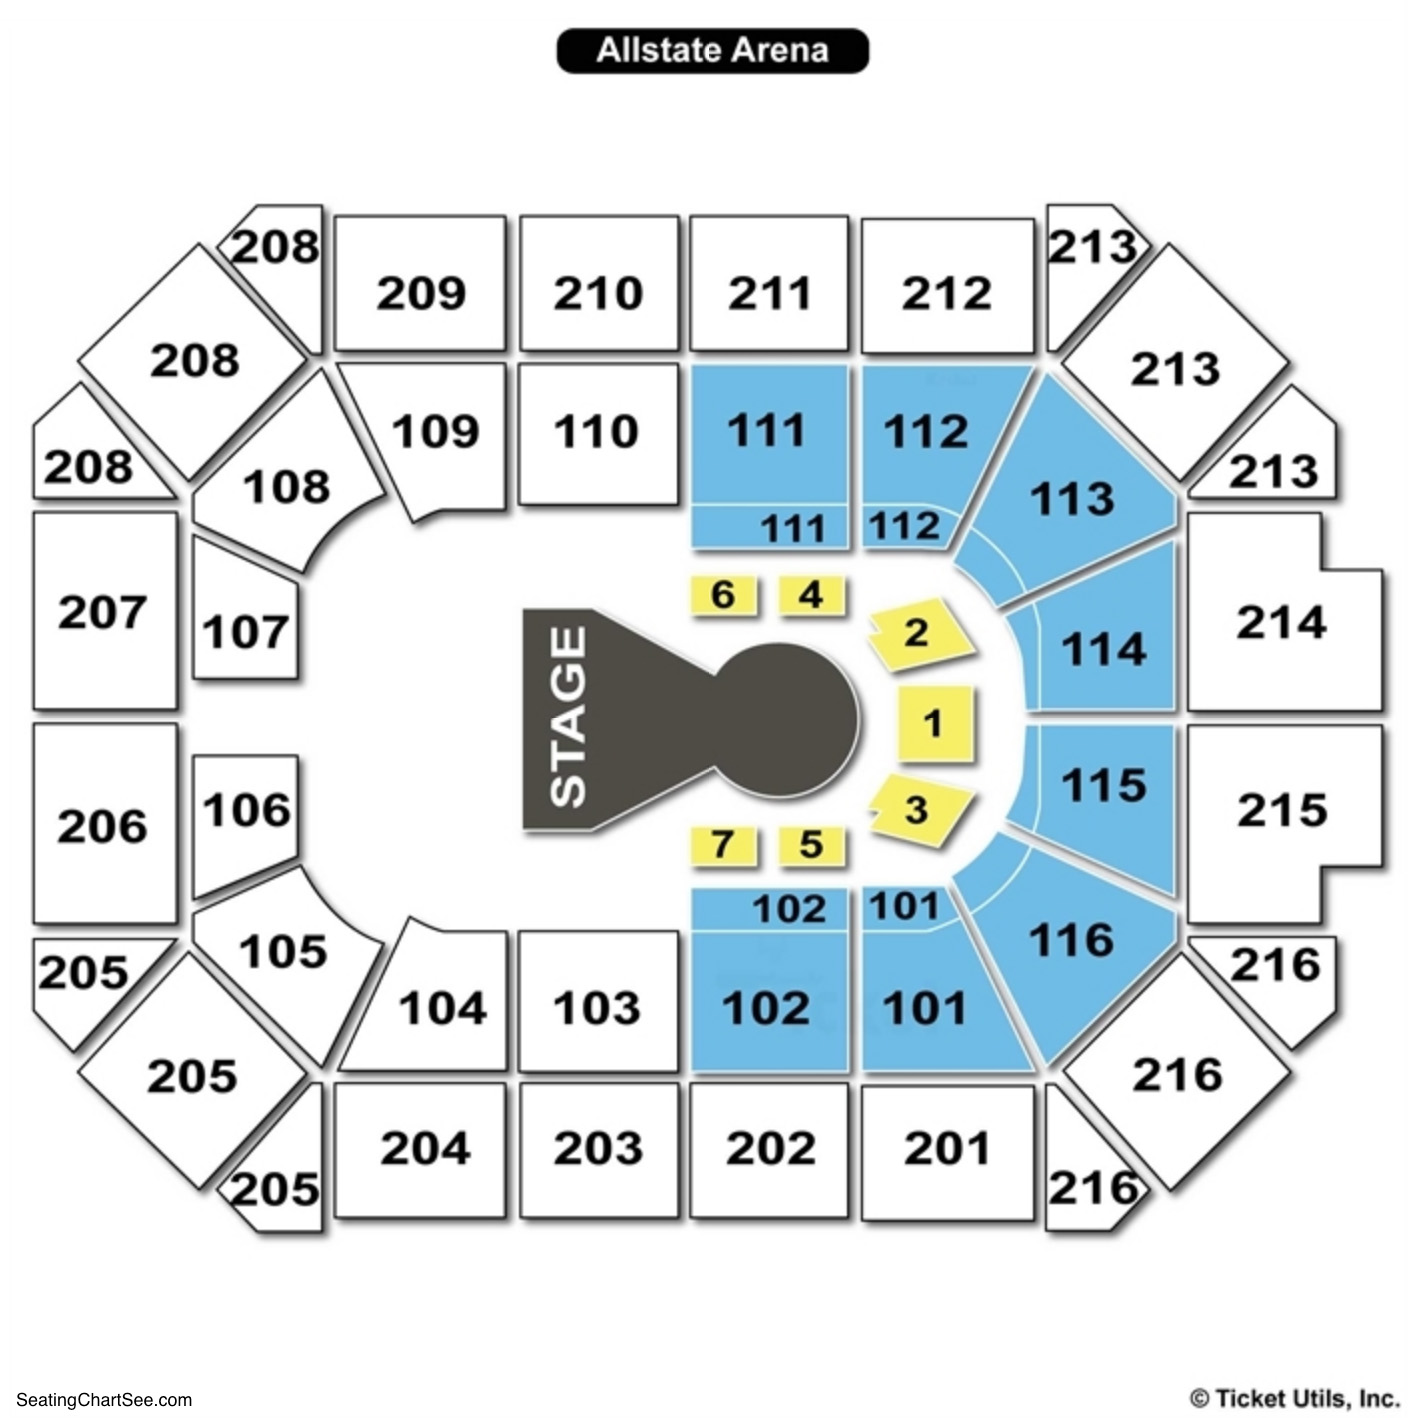 Allstate Arena Seating Charts Views